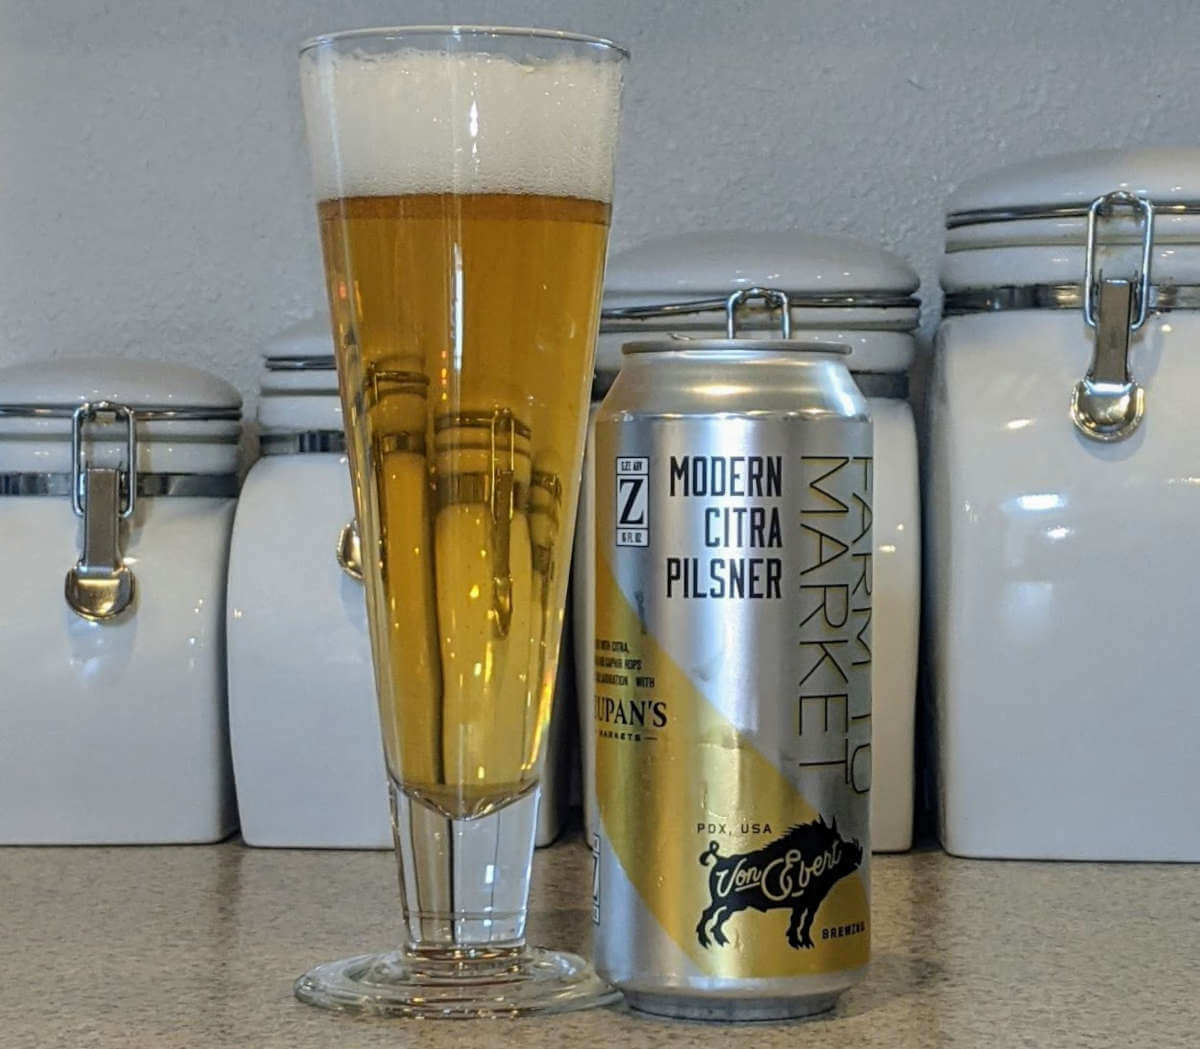 Modern lager with Zupan’s/Von Ebert Modern Citra Pilsner (review)